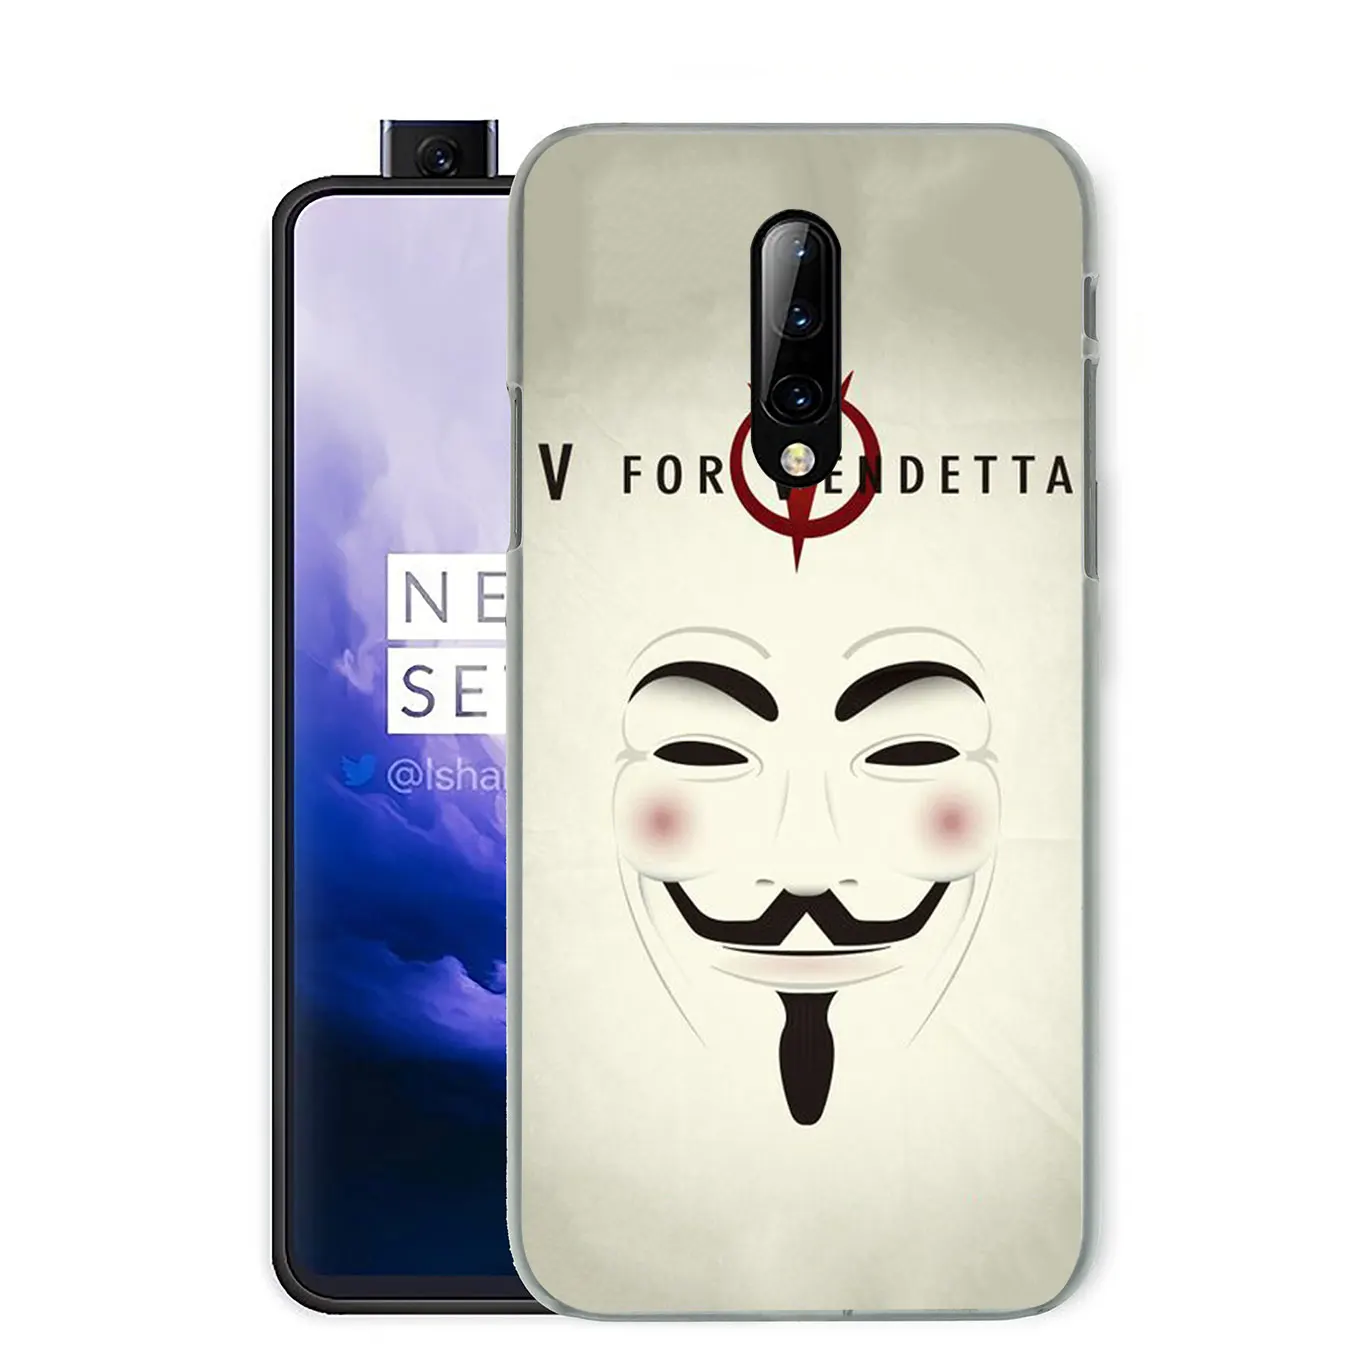 V для Vendetta жесткий пластиковый чехол для сотового телефона чехол для Oneplus 7 Pro 6 6T 5 5T 7Pro One Plus